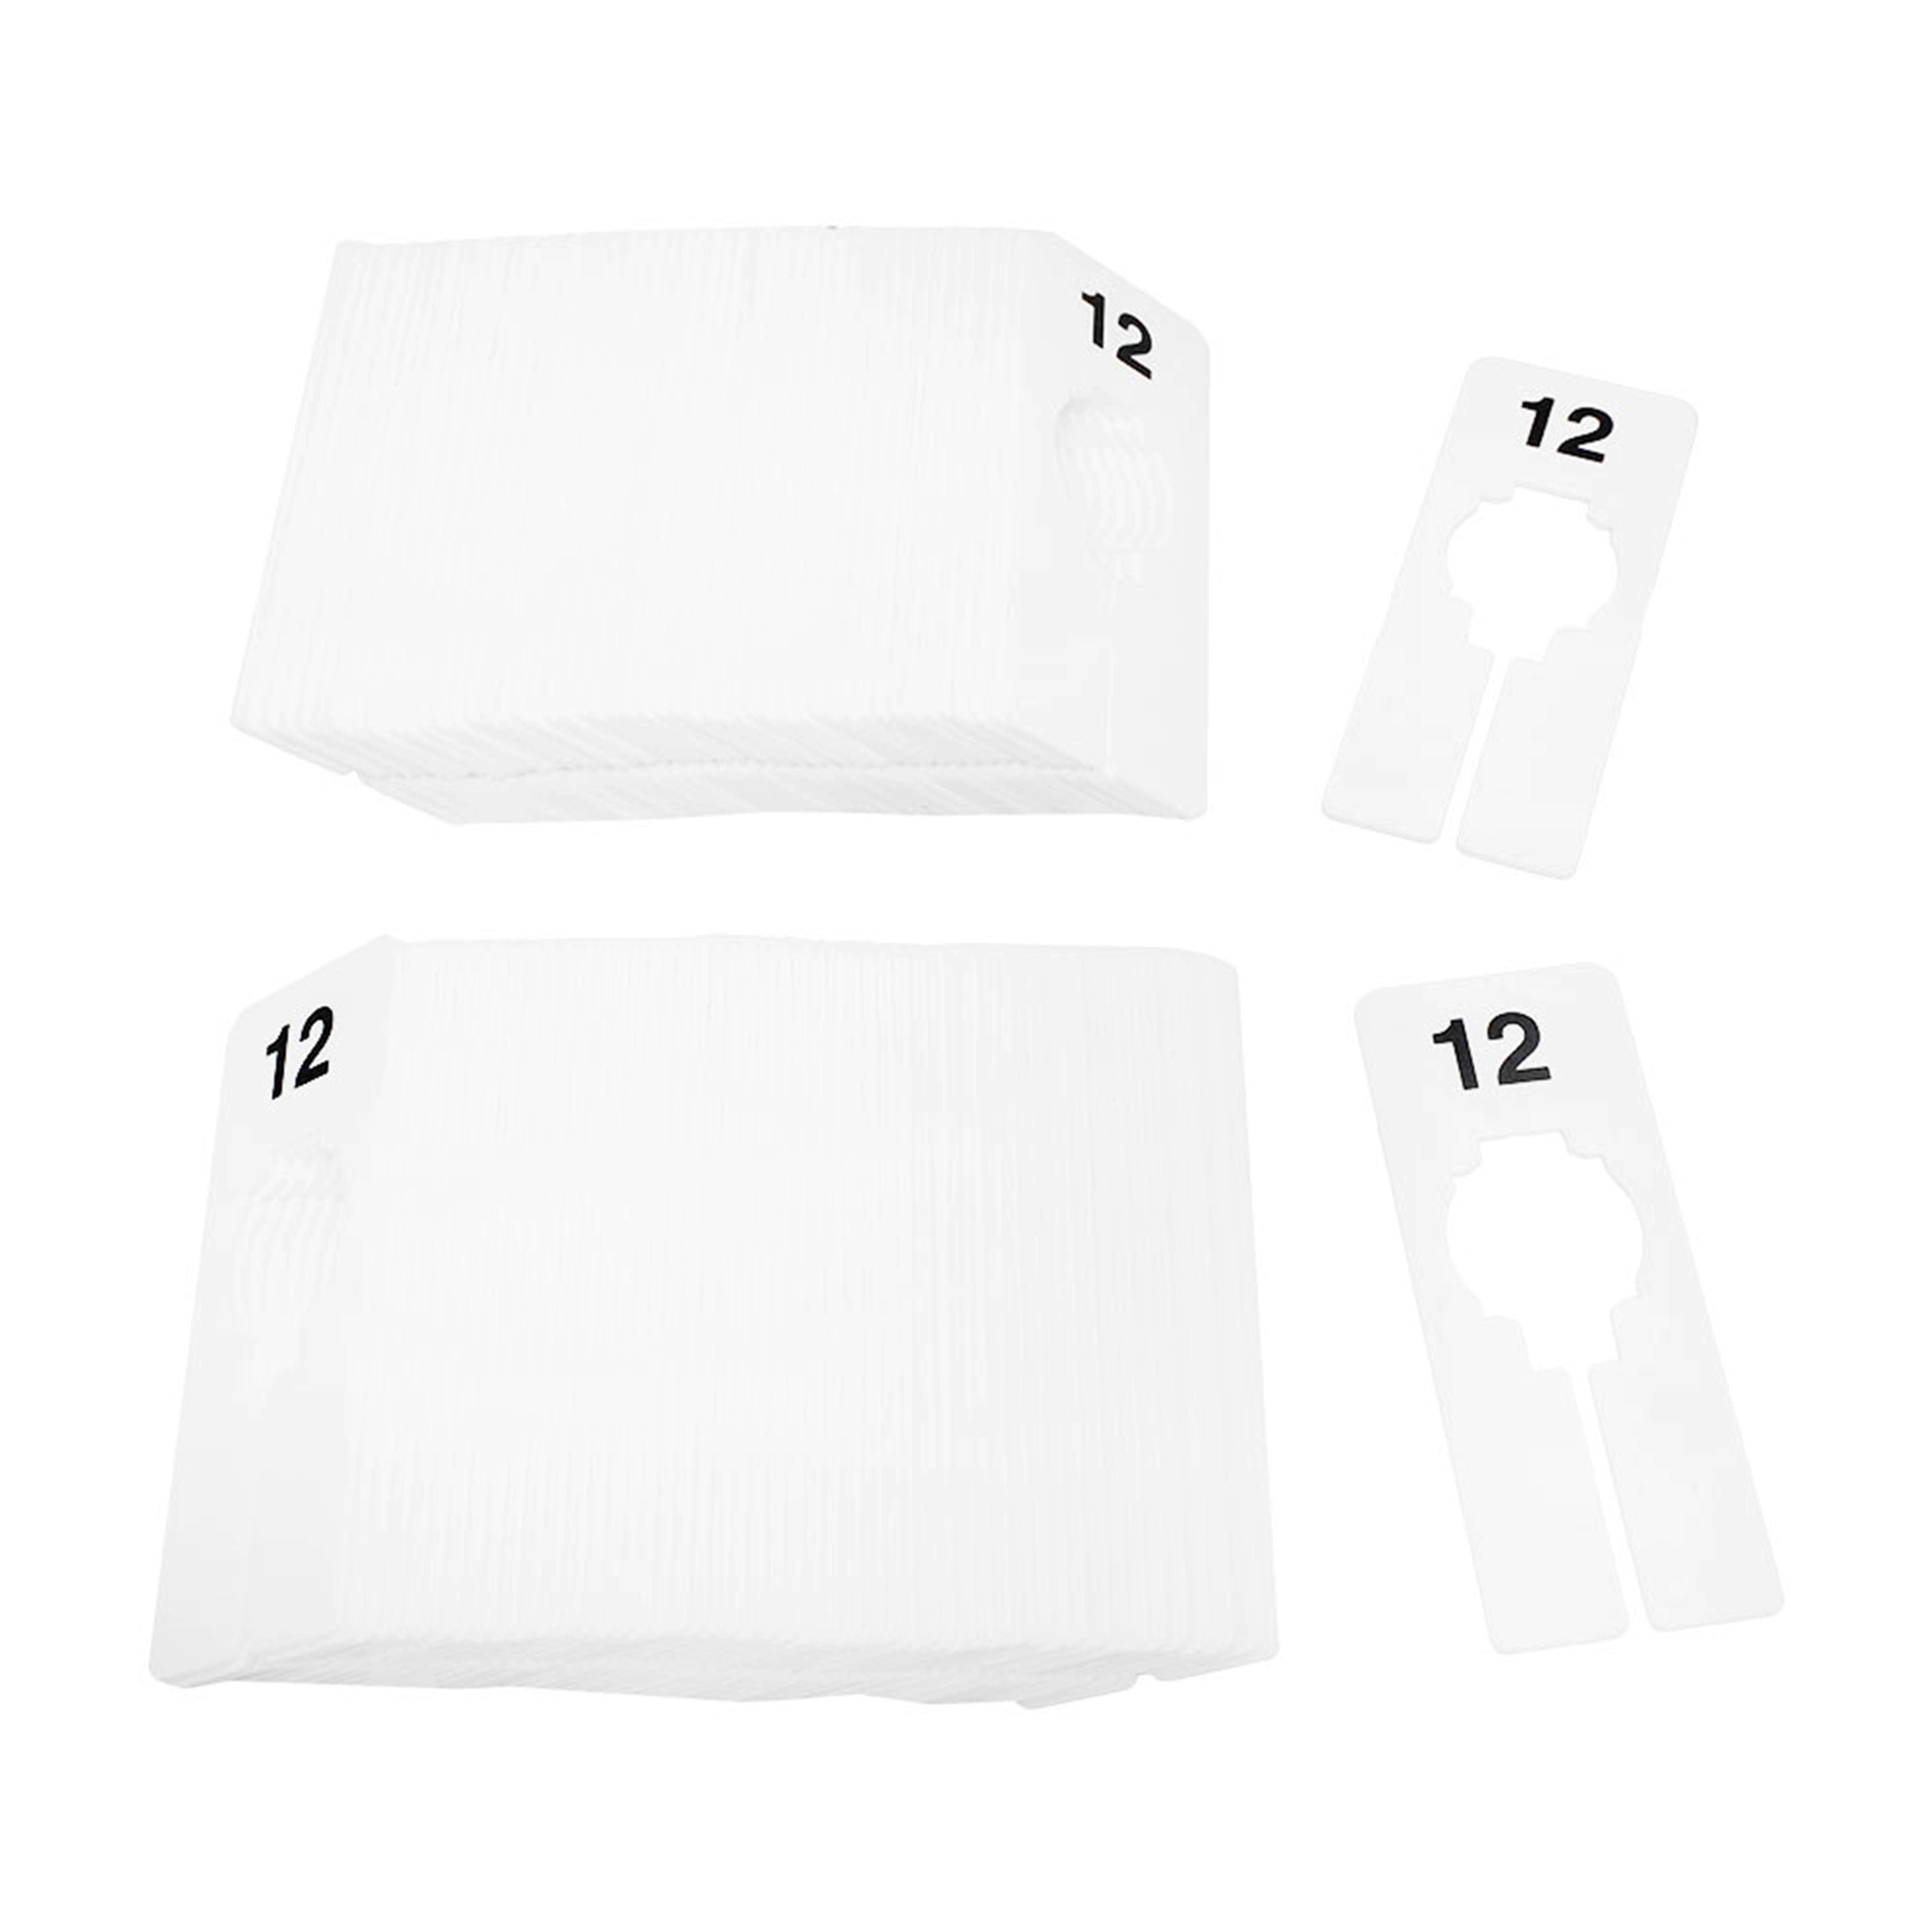 10 PC 2" x 5" Clothing Rack Size 12 Dividers Hangers White Plastic Rectangular 